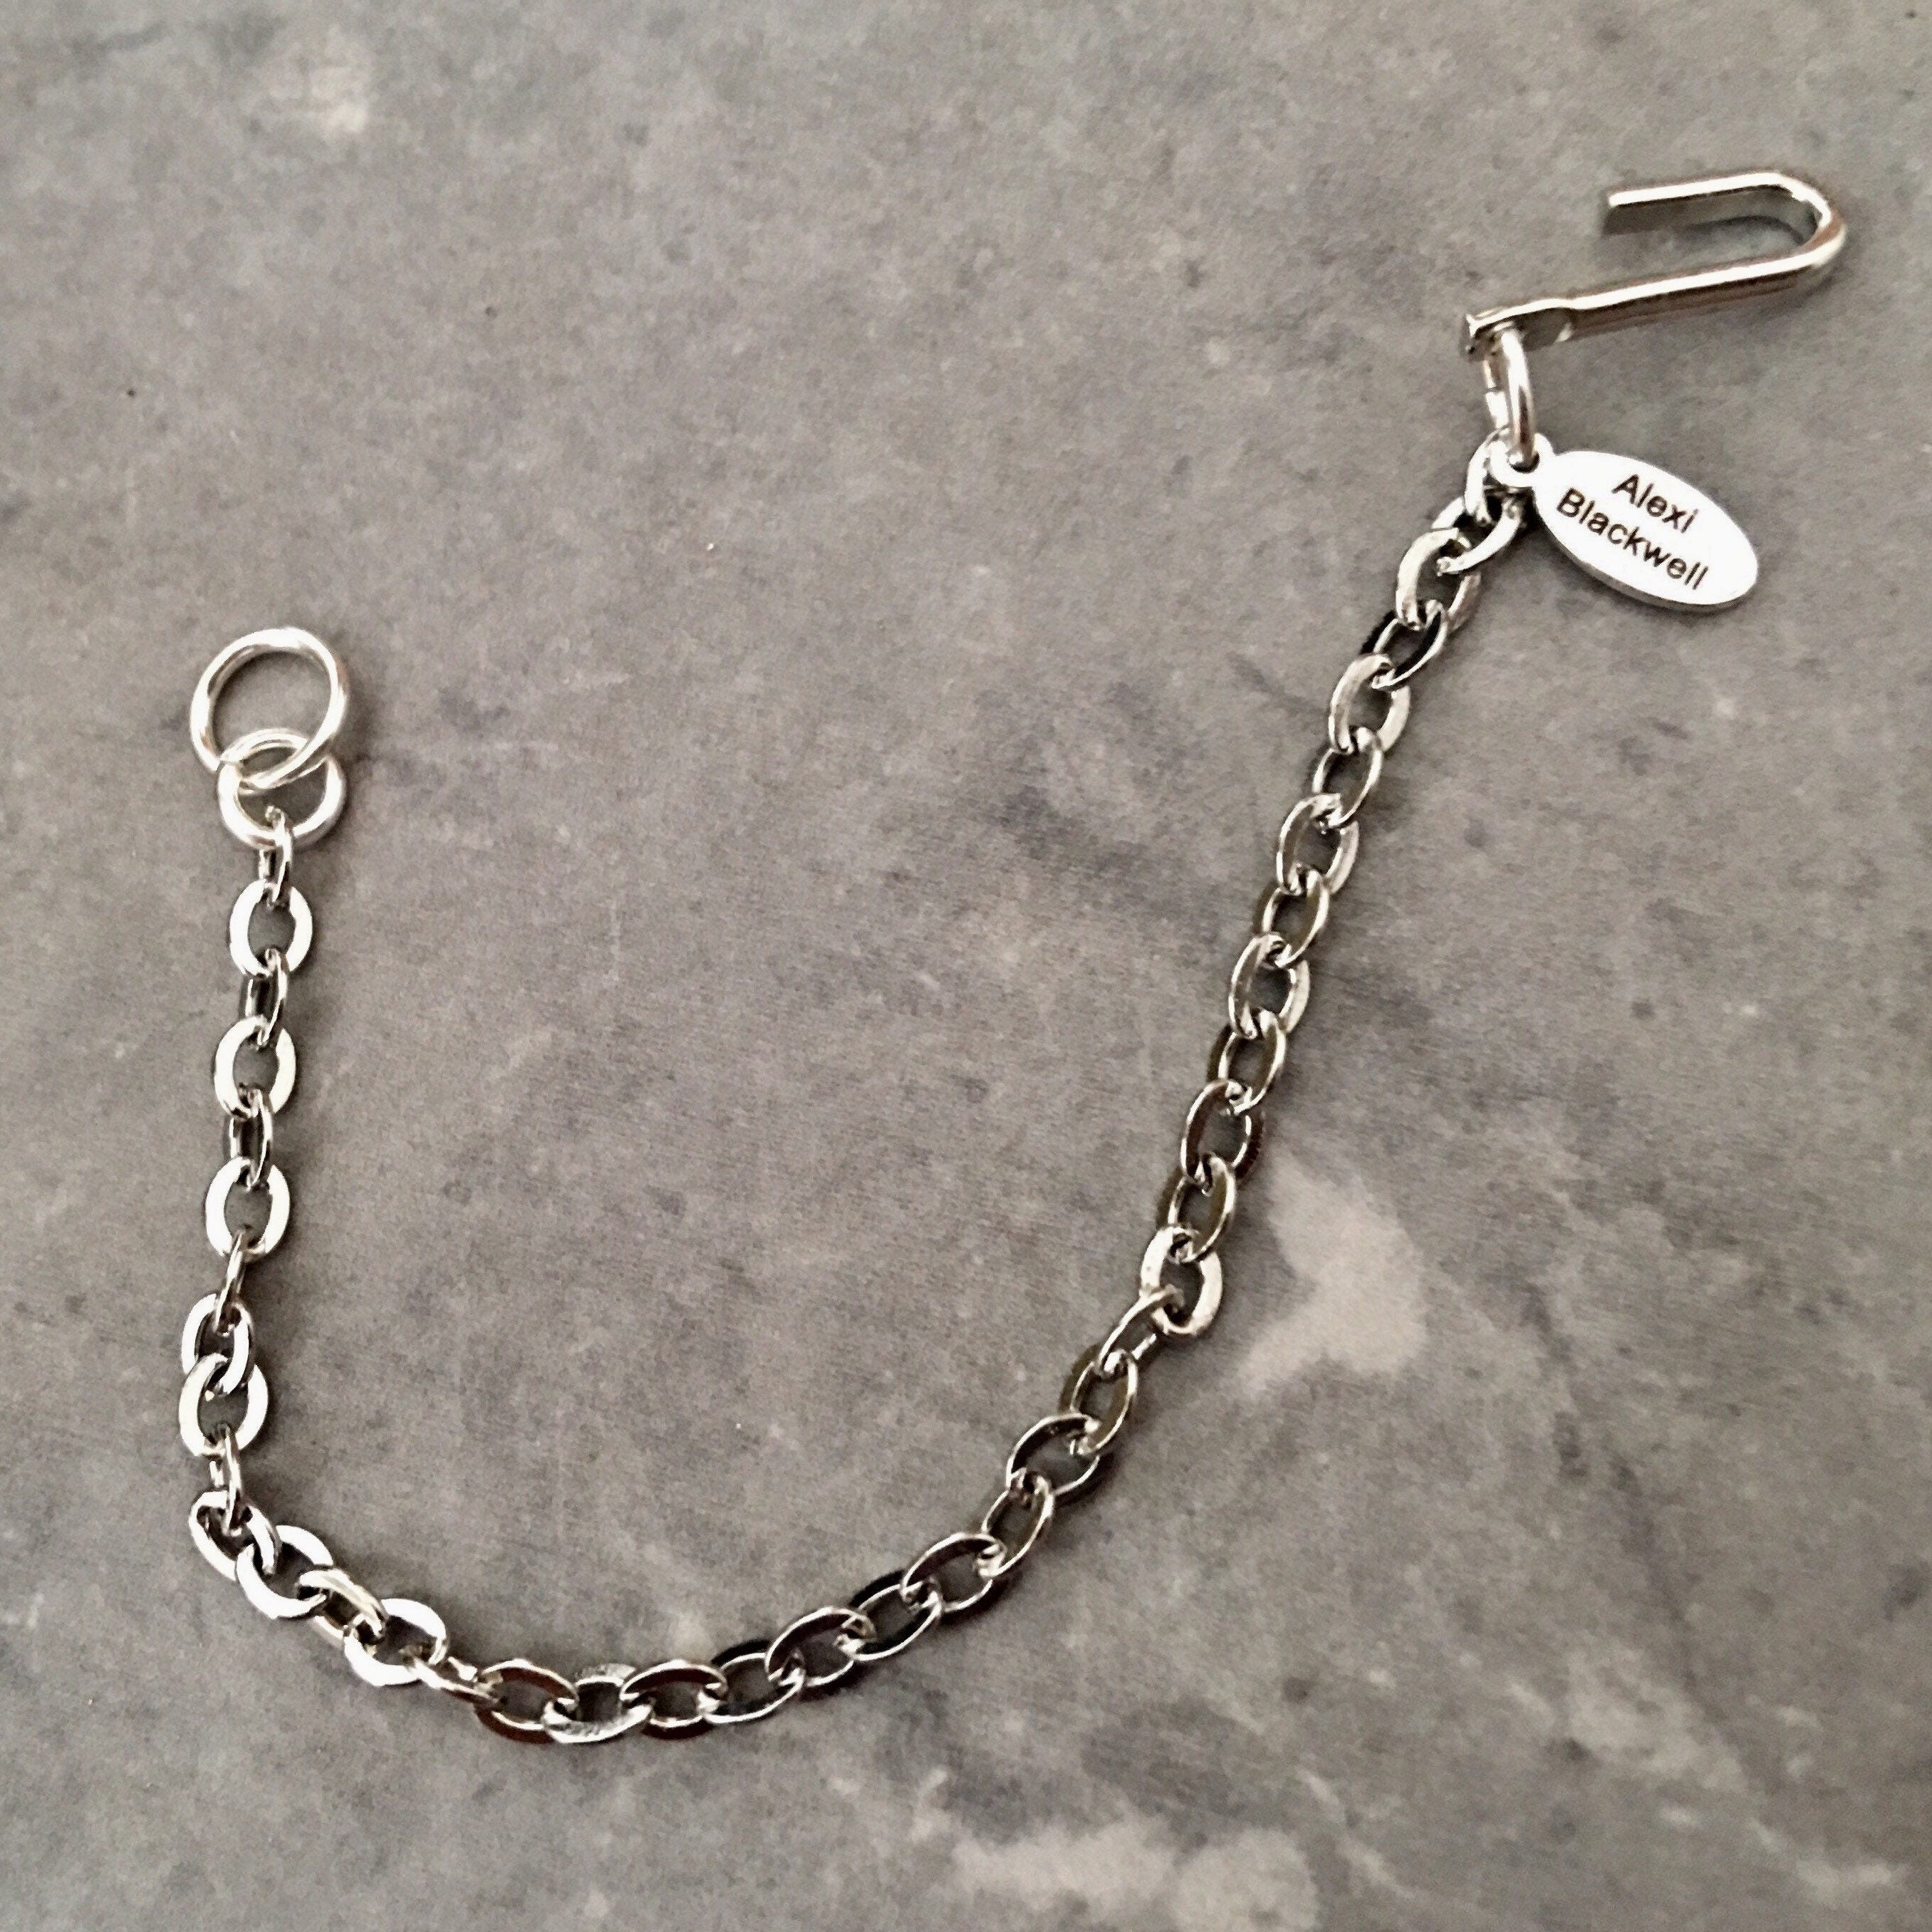 Sterling Silver Chain Length Extender for Necklace or Bracelet, 1